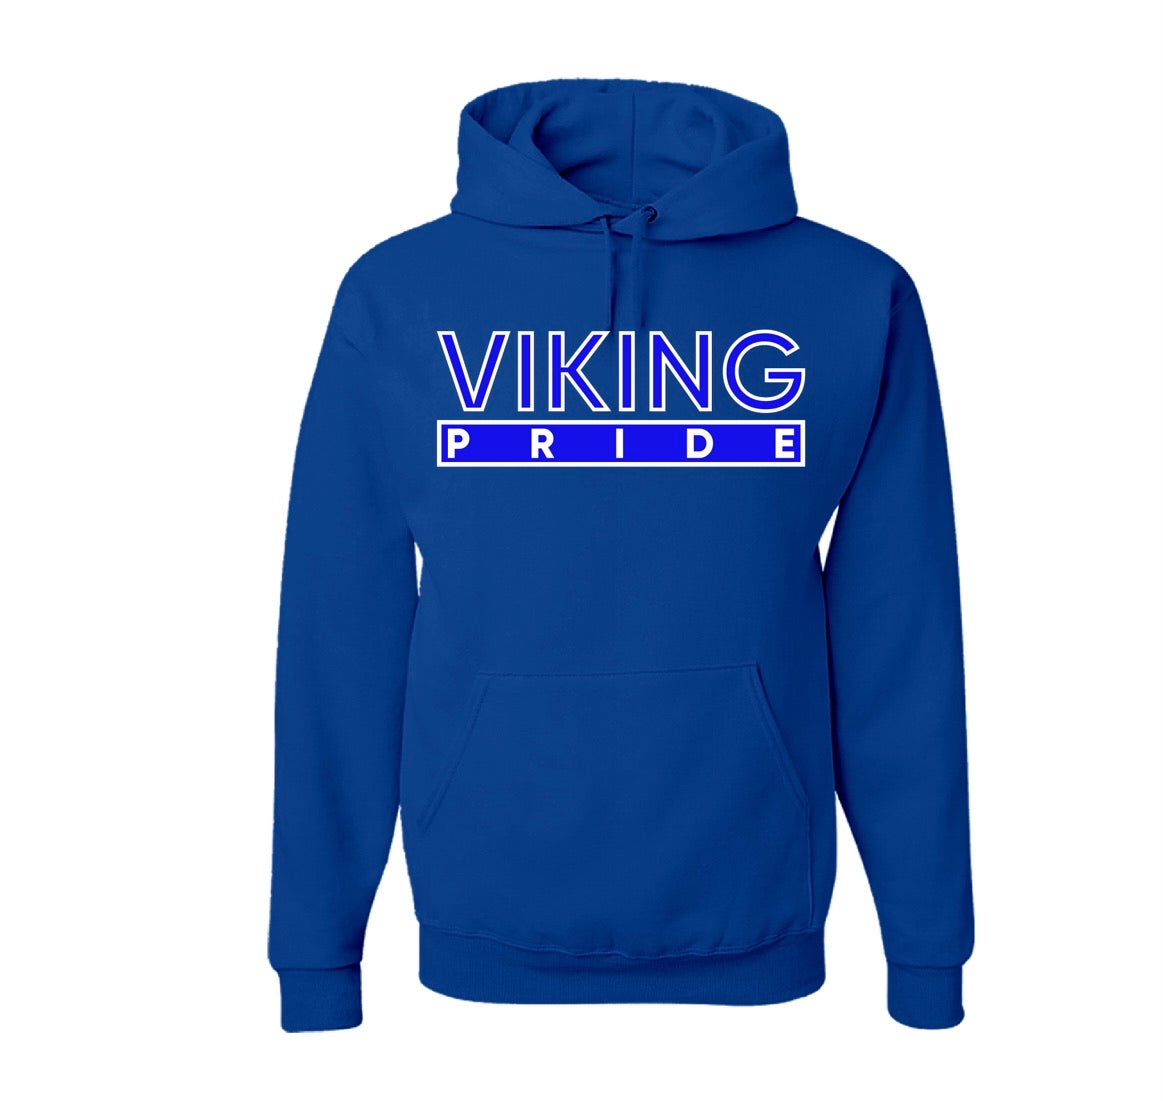 The “Viking Pride” Hoodie in Royal Blue/White #nc